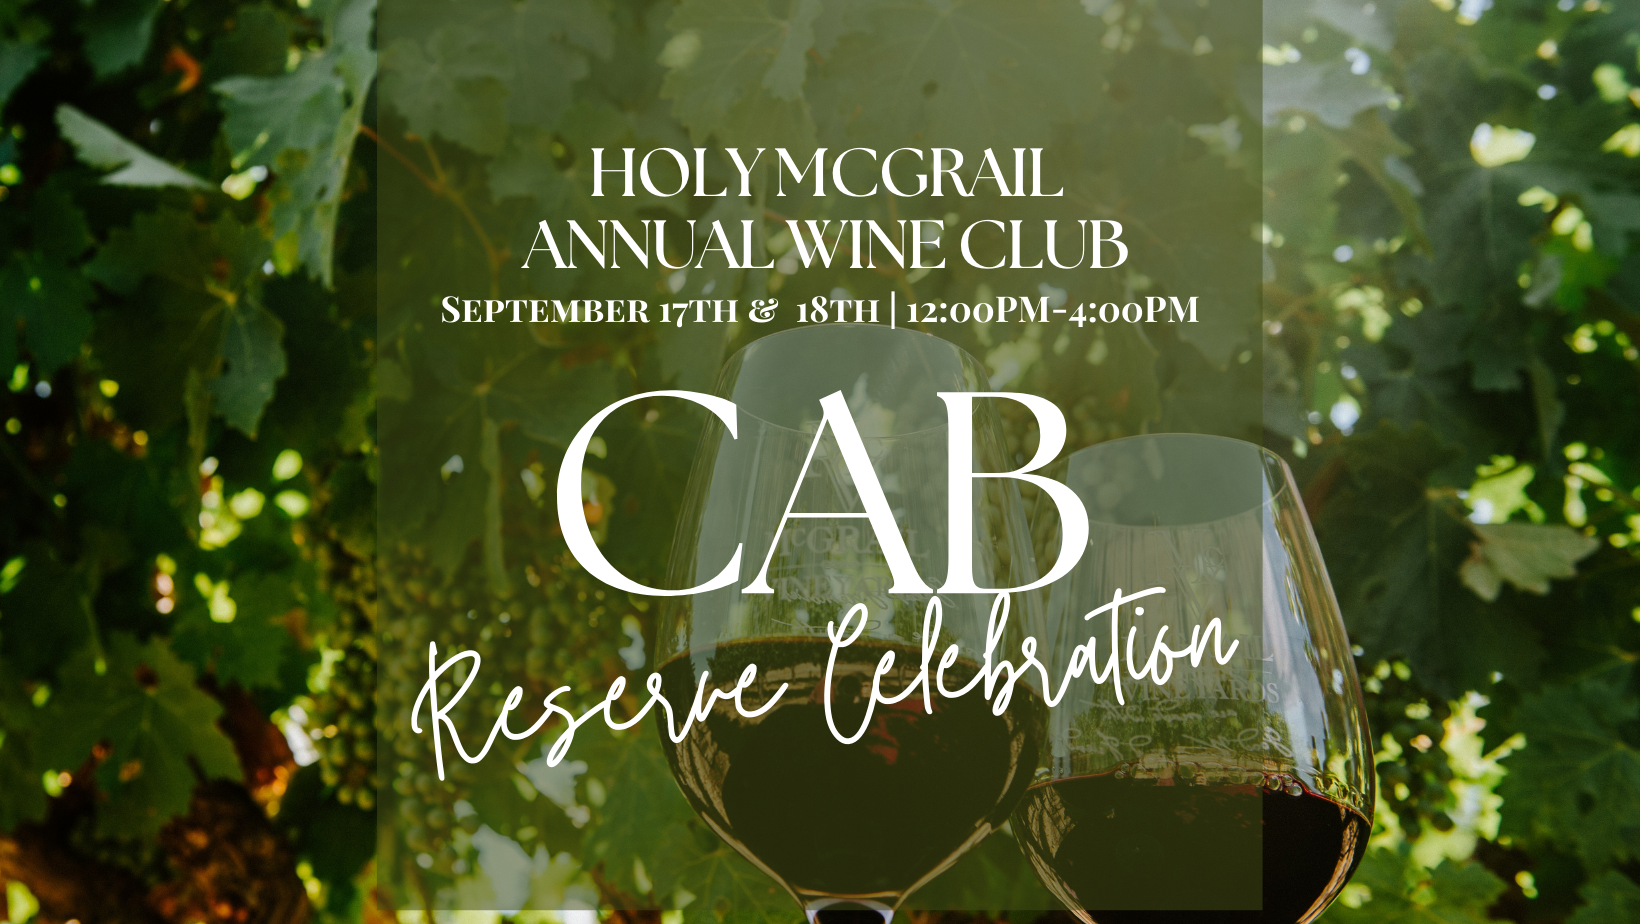 Holy McGrail Annual Wine Club Cabernet Reserve Celebration